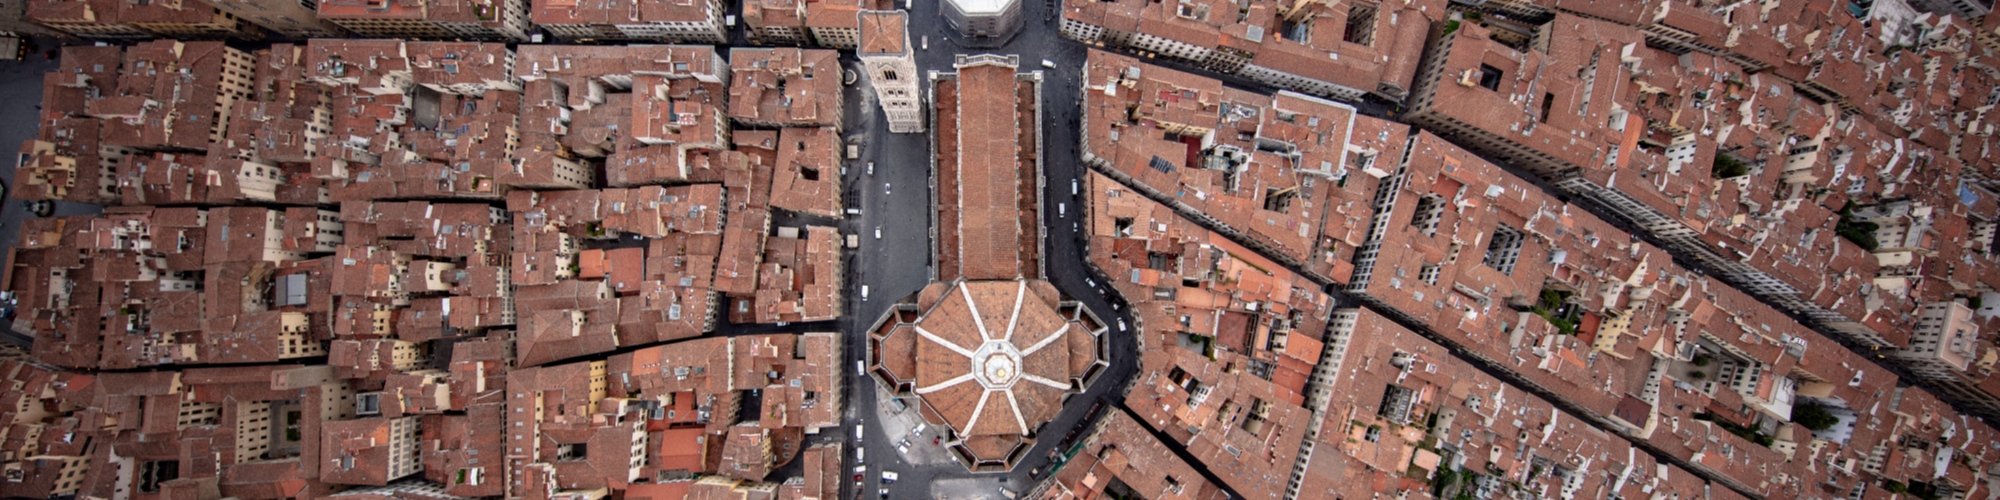 Florencia, vista aérea de la Cúpola de Brunelleschi